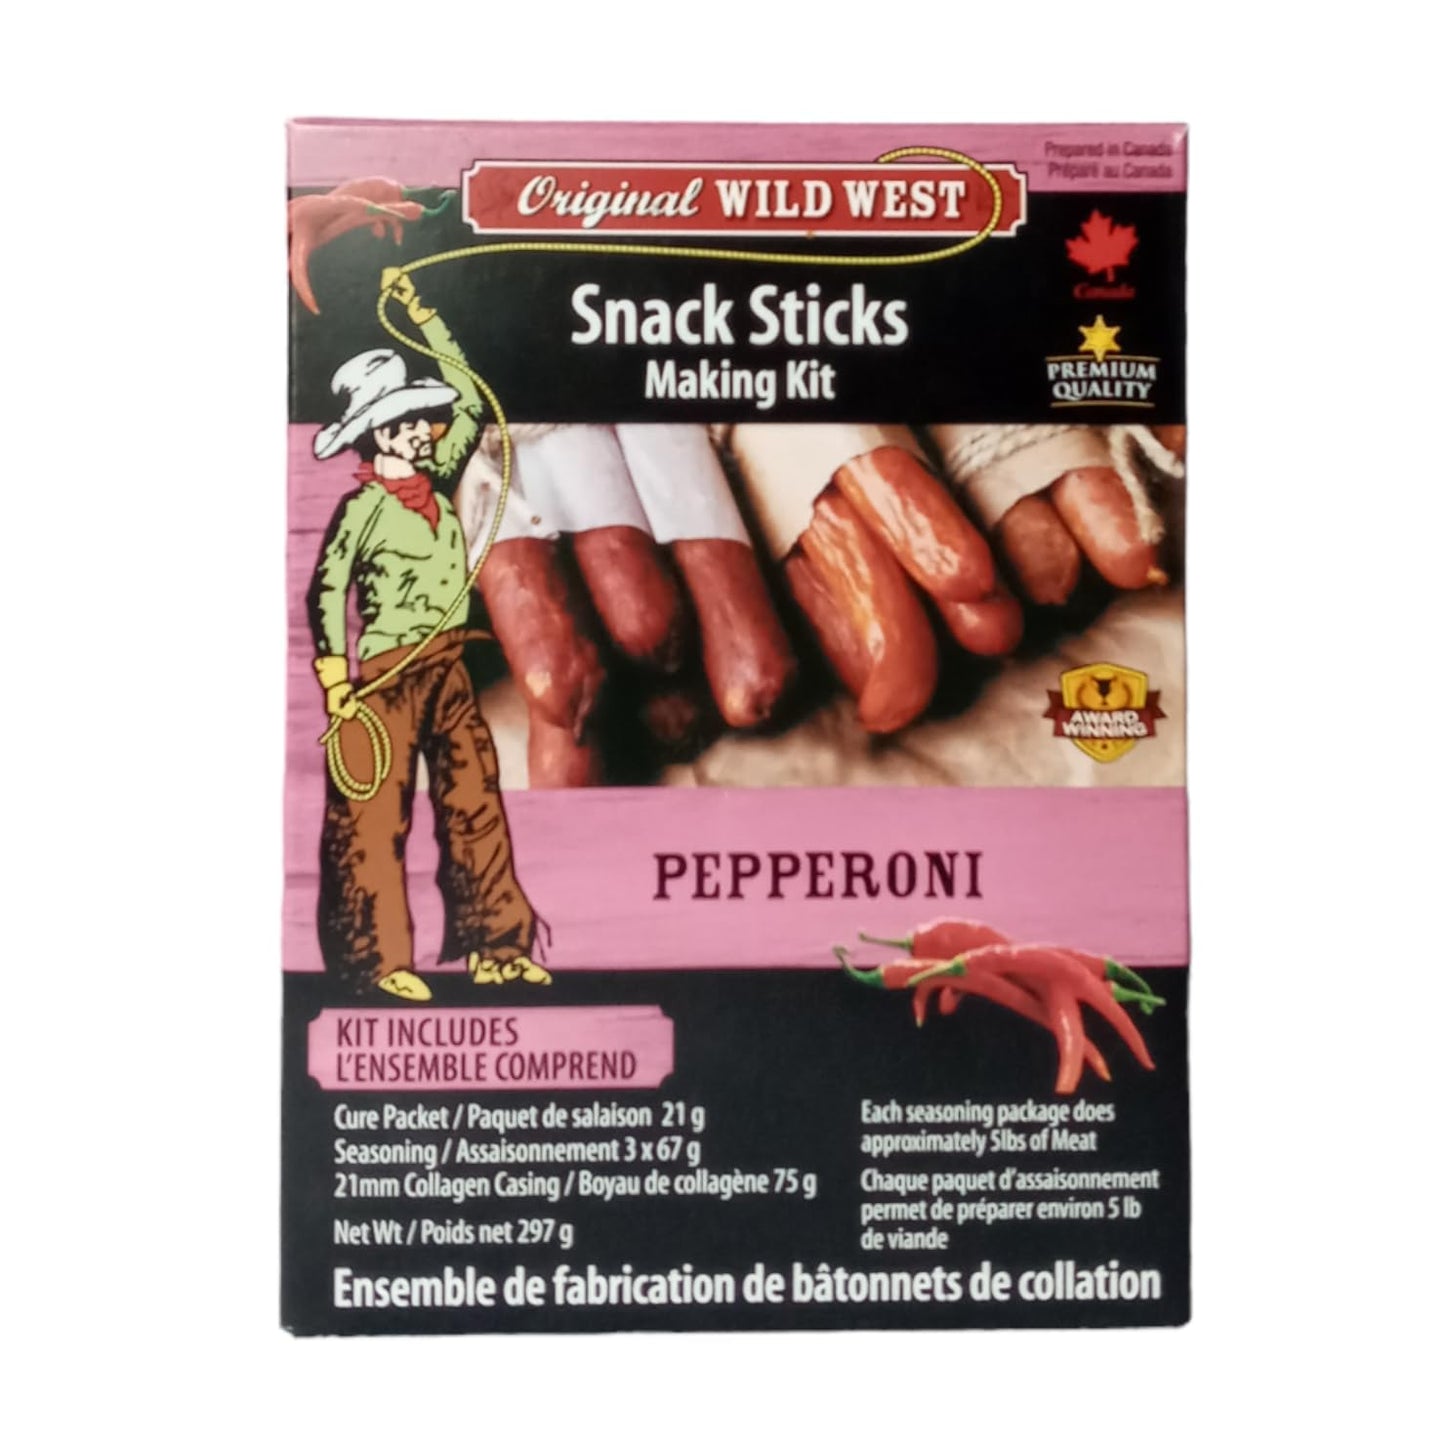 Original Wild West Snack Sticks Making Kit - Pepperoni